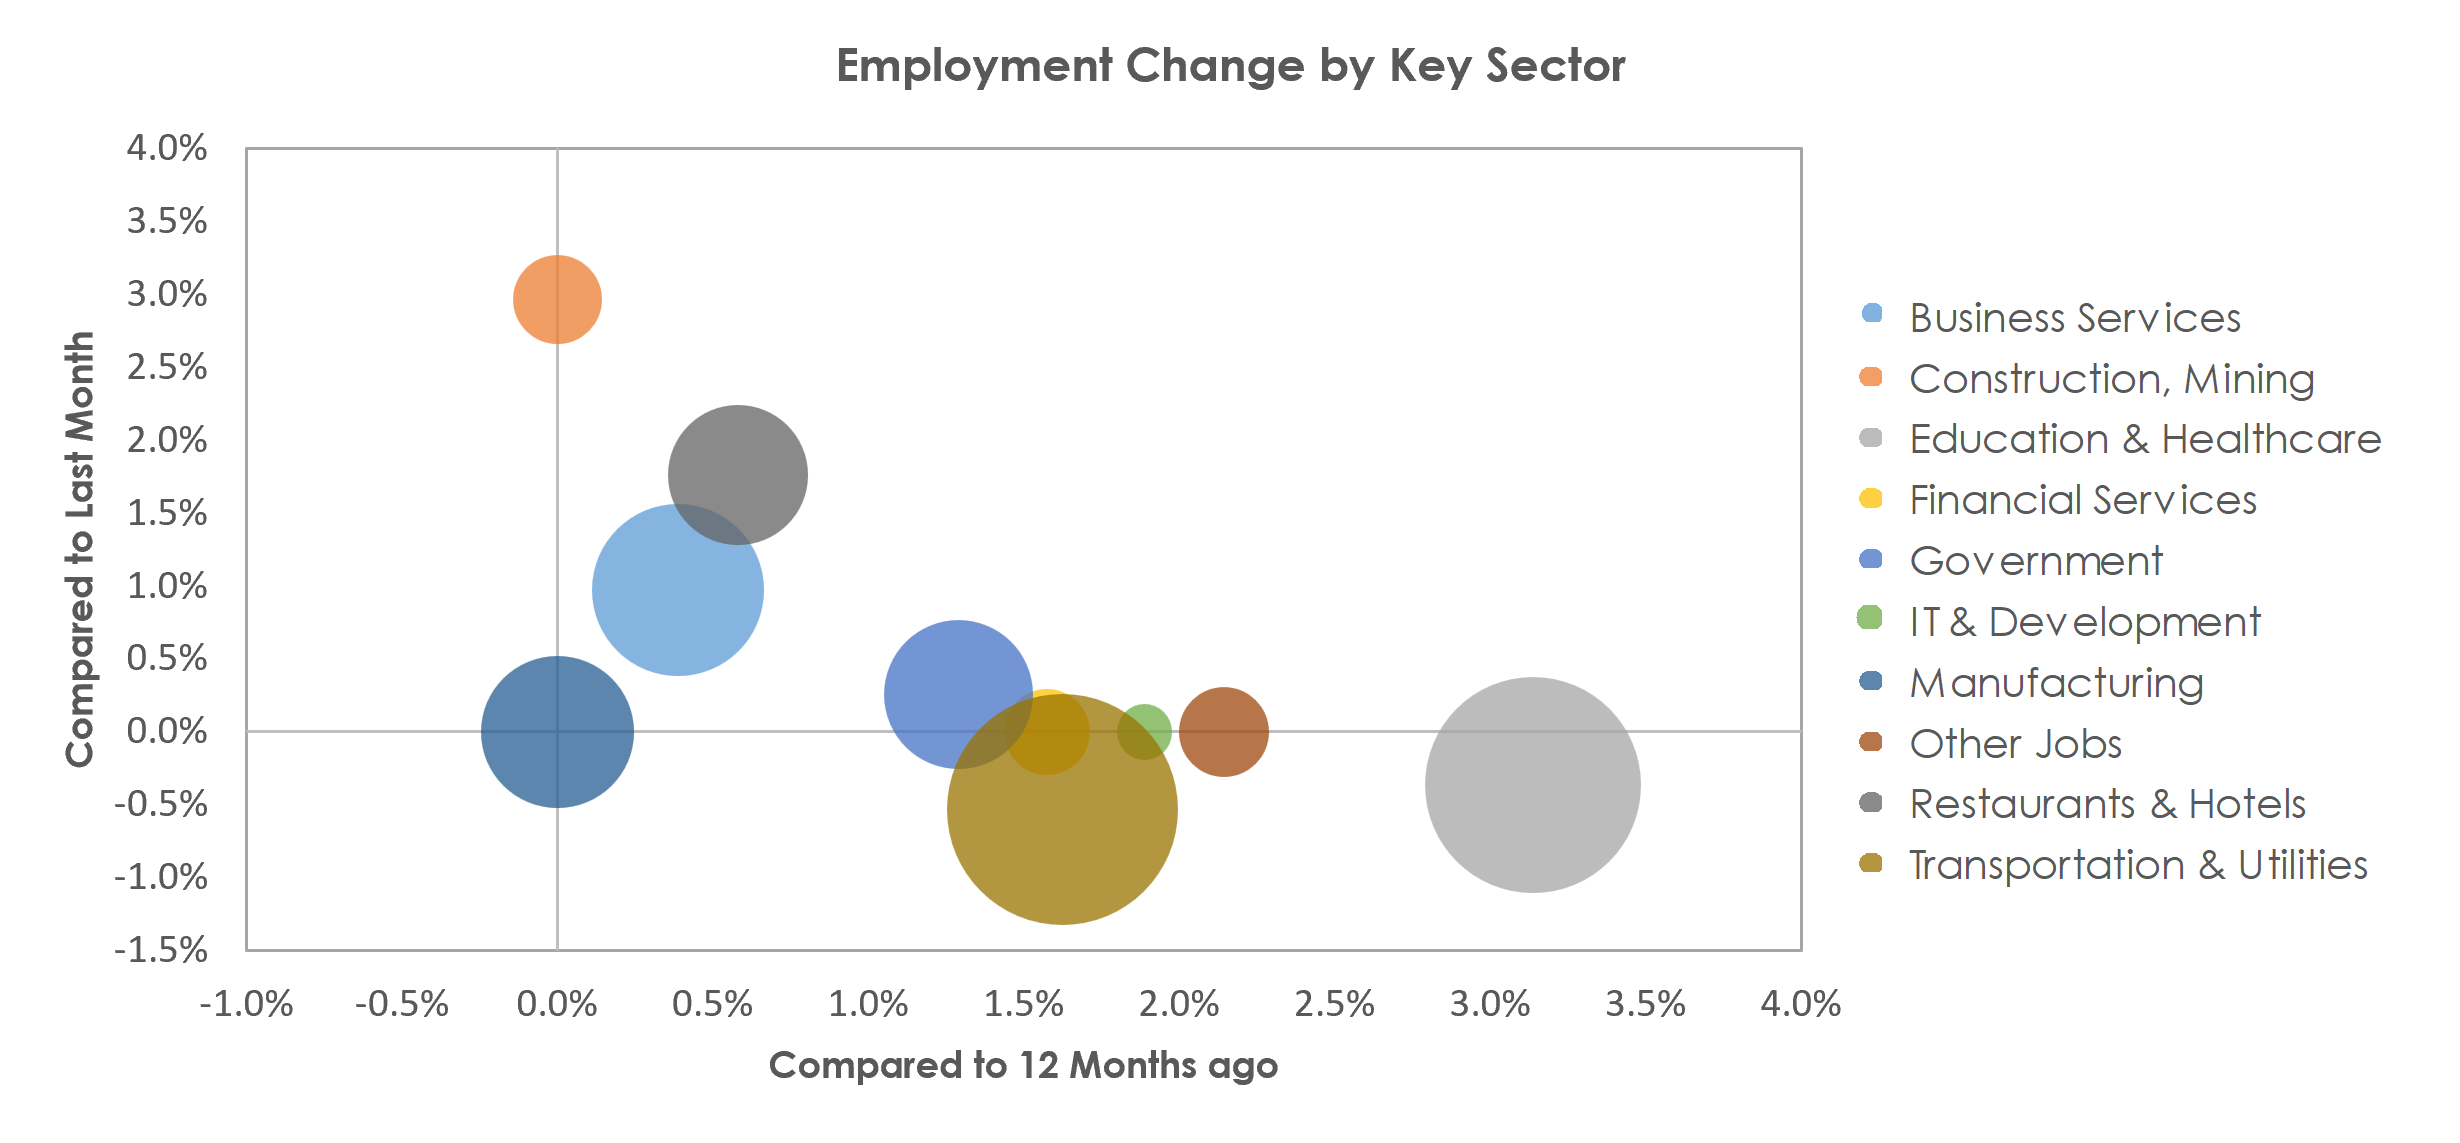 Allentown-Bethlehem-Easton, PA-NJ Unemployment by Industry April 2023